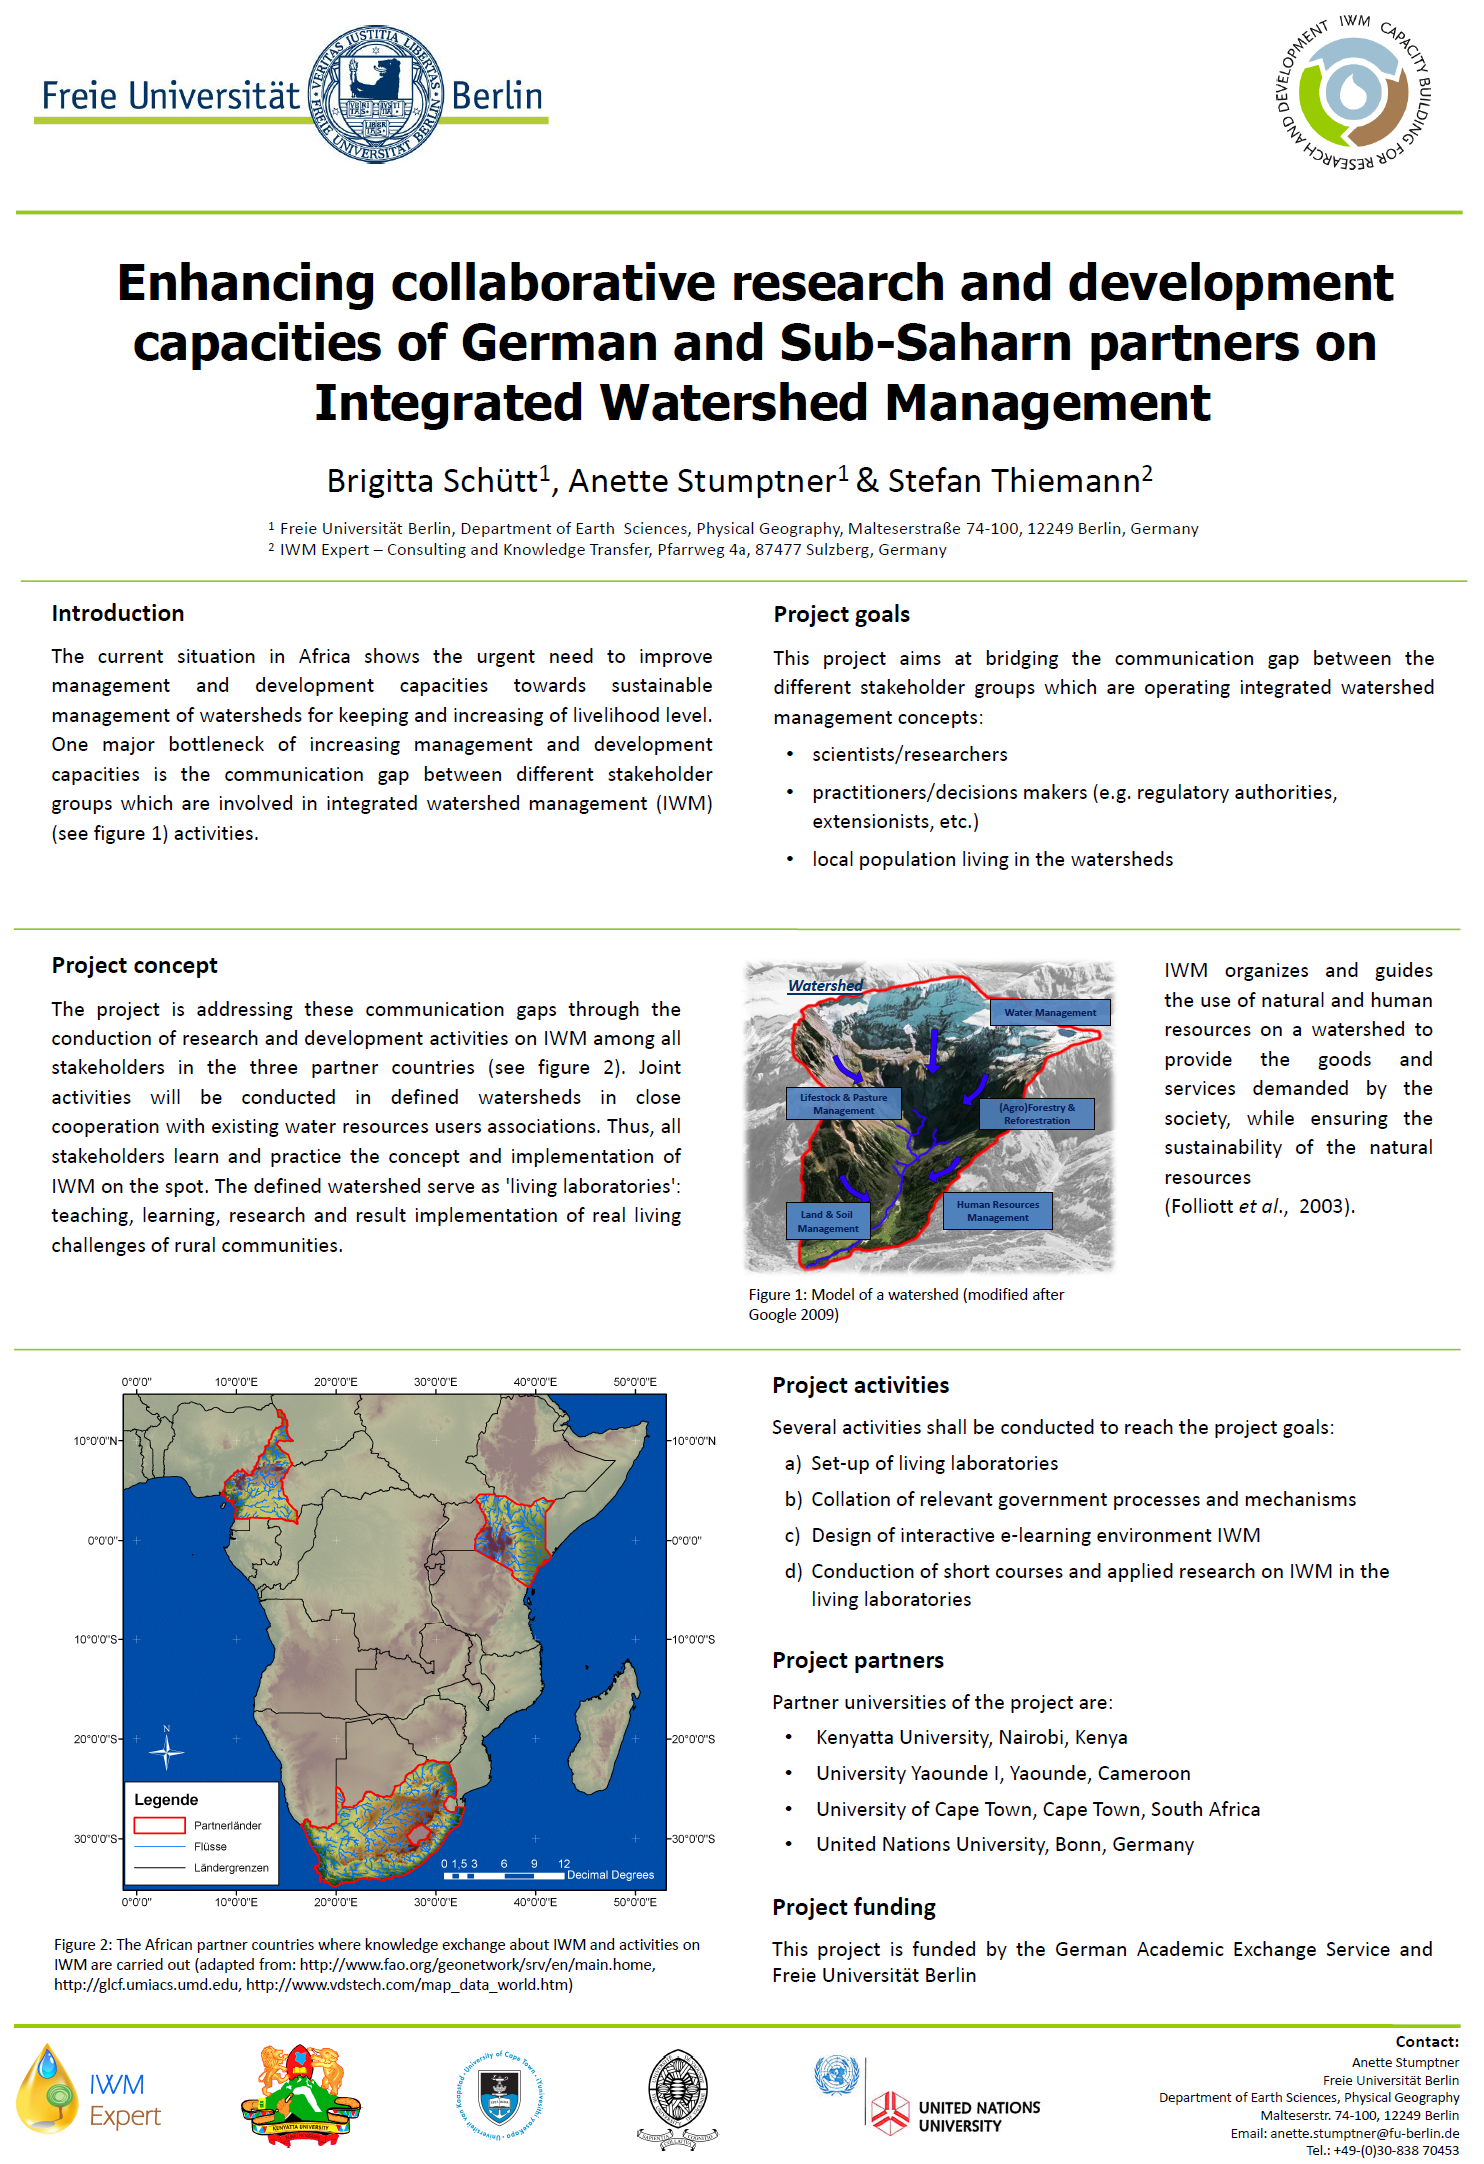 Brigitta Schütt, Anette Stumptner, Stefan Thiemann (2012): Project concept 'Integrated Watershed Management Research and Development Capacity Building'